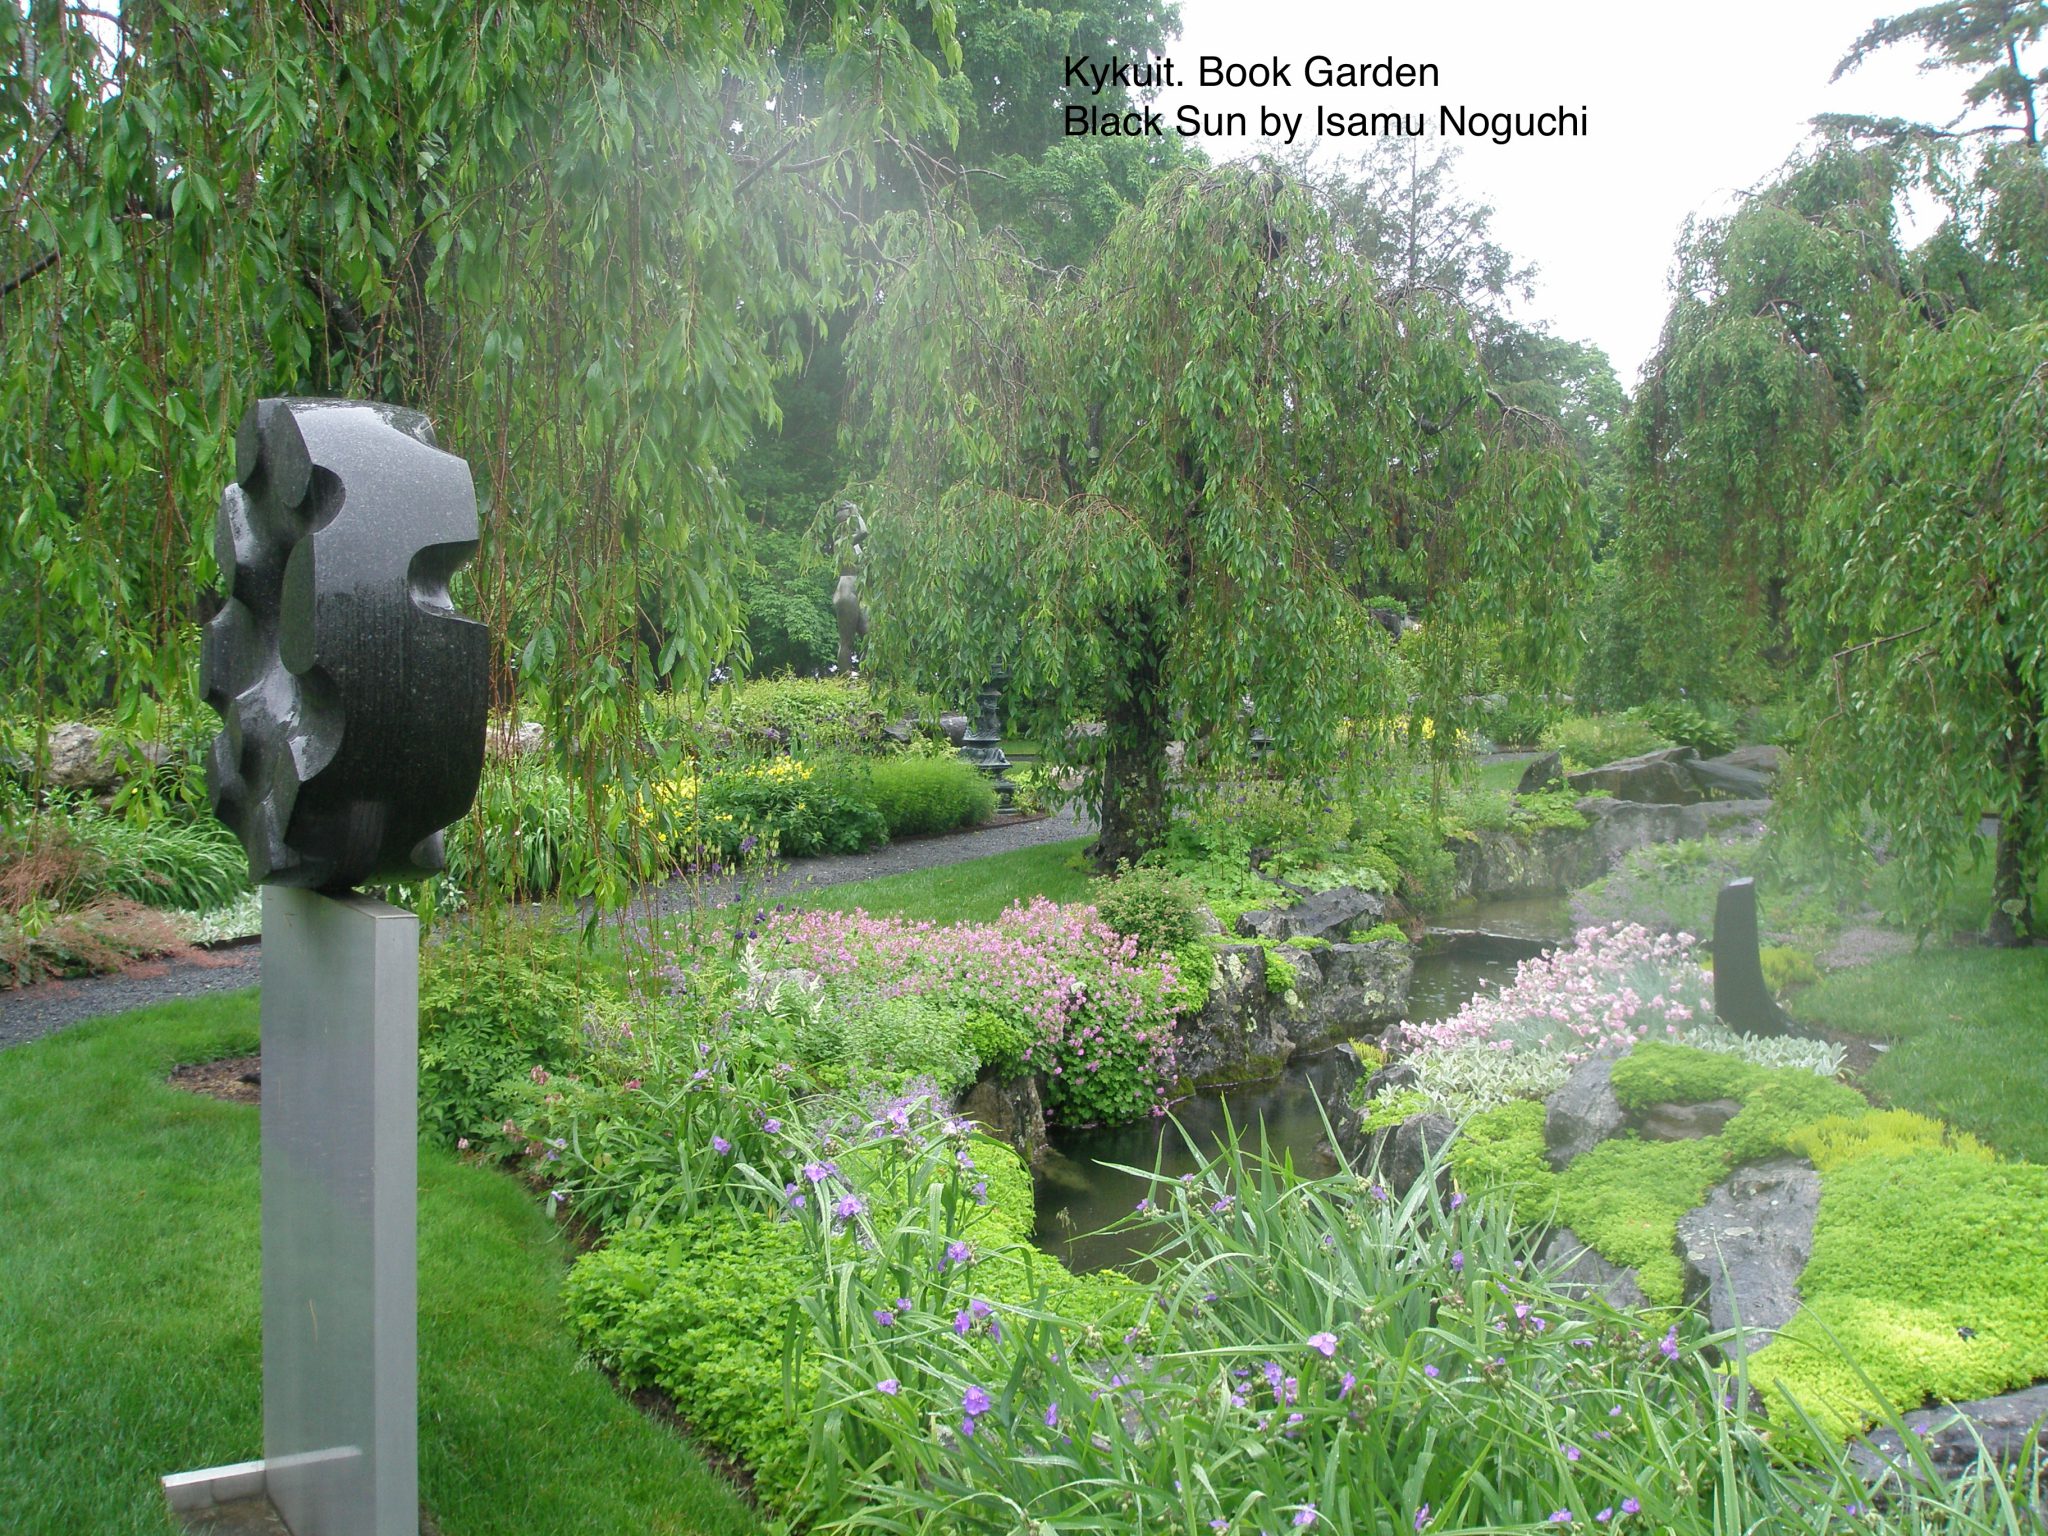 Sculpture from 1960, in the Brook Garden